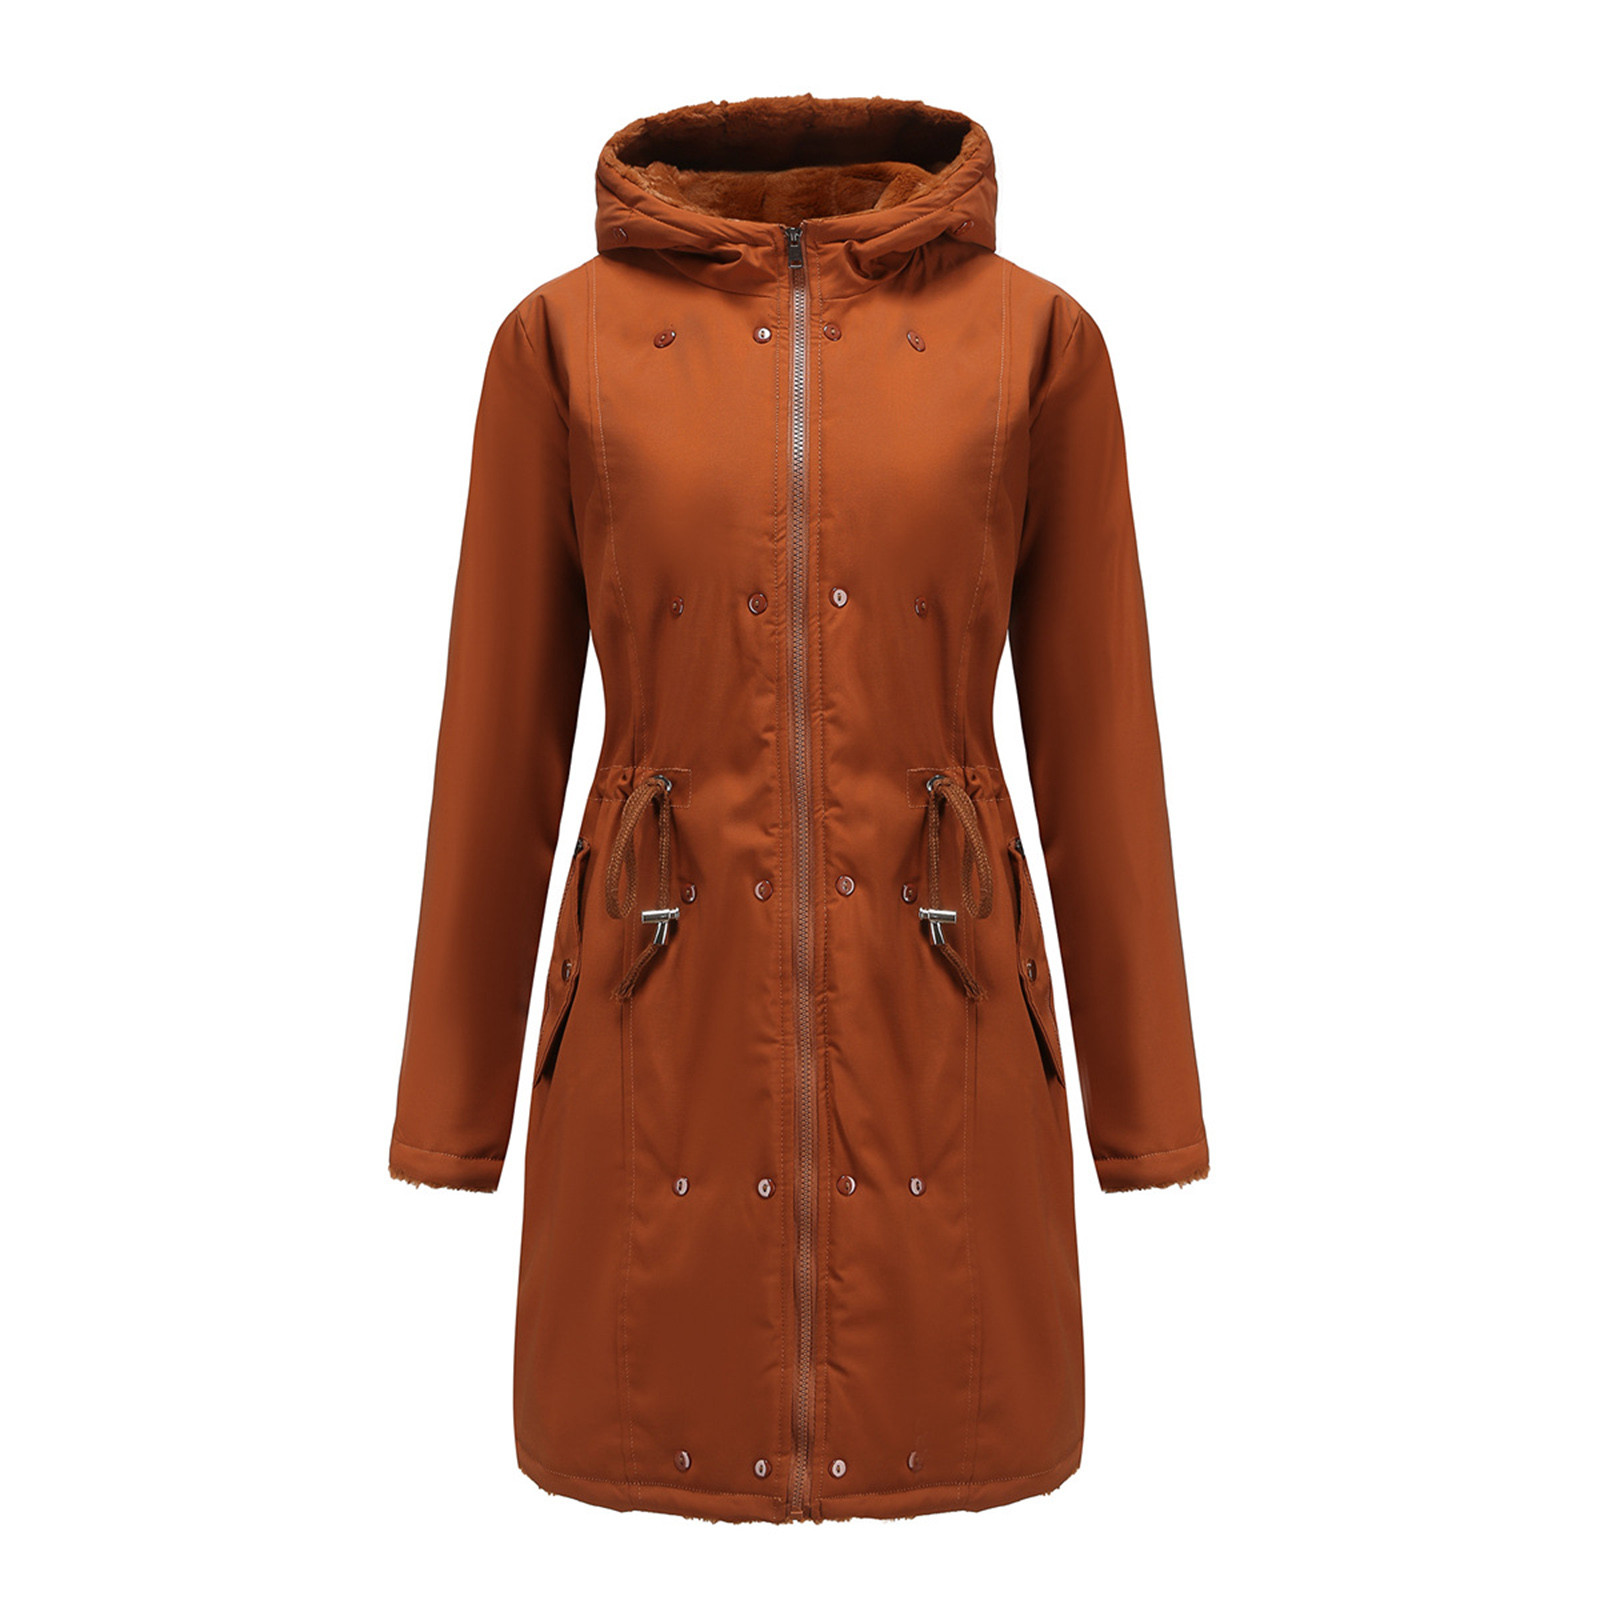 YFPWM Jacket for Women Winter Wrap Cape Coat Fleece Open Front Coat With Pockets Double Sided Winter Coat Light Jacket Casual Slim Fit Jacket Short Blouse - image 4 of 6